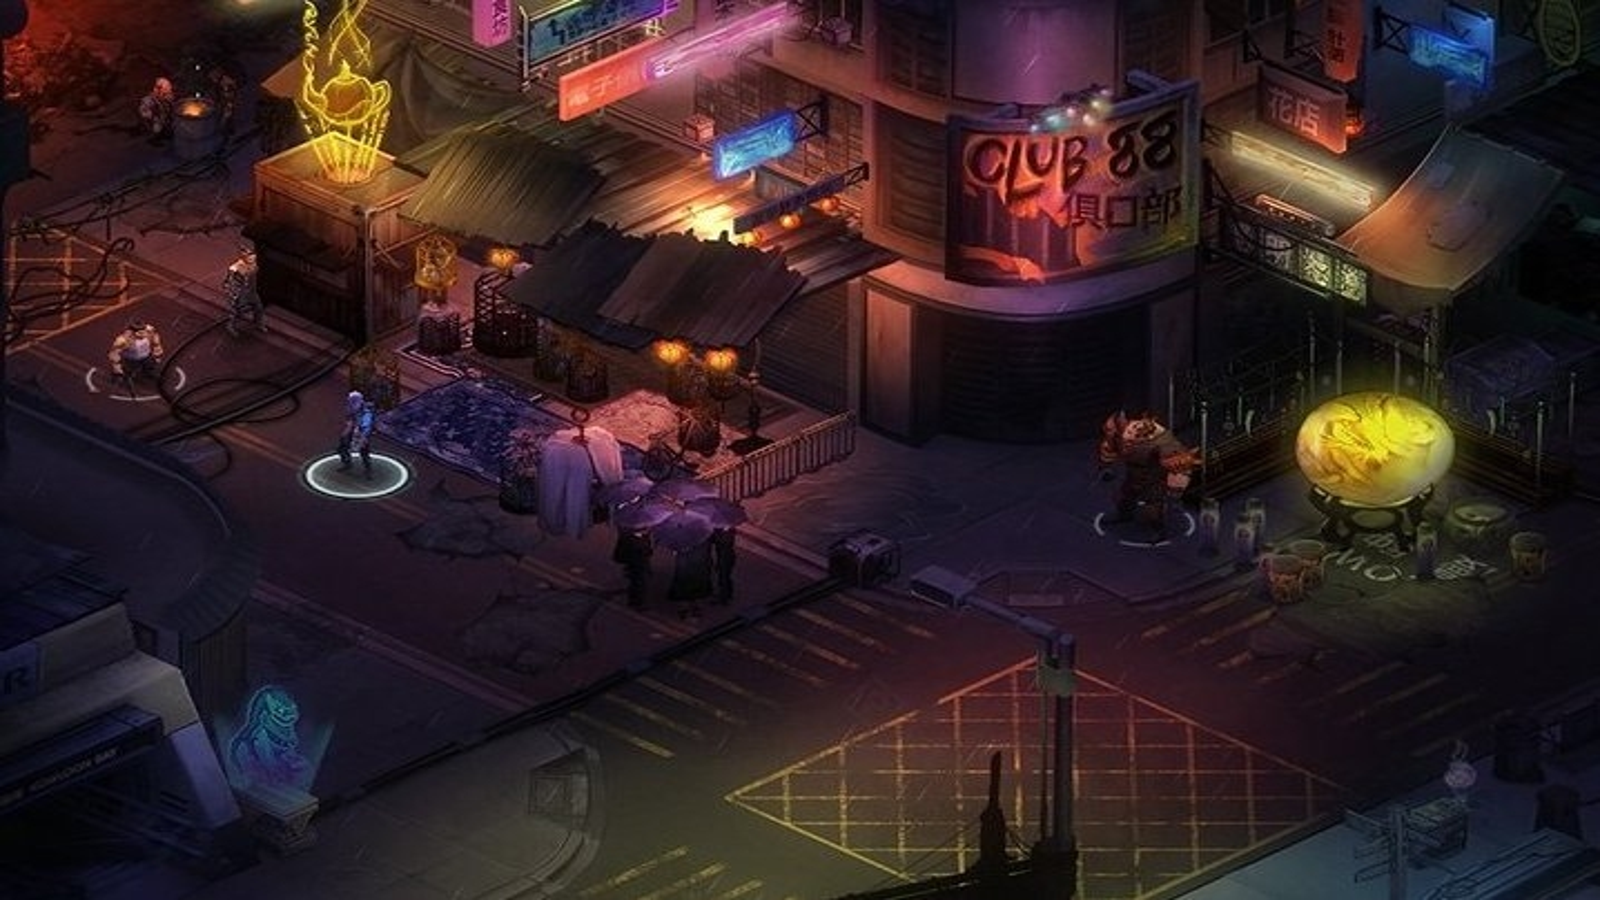 Shadowrun: Hong Kong (Extended Edition) STEAM digital for Windows